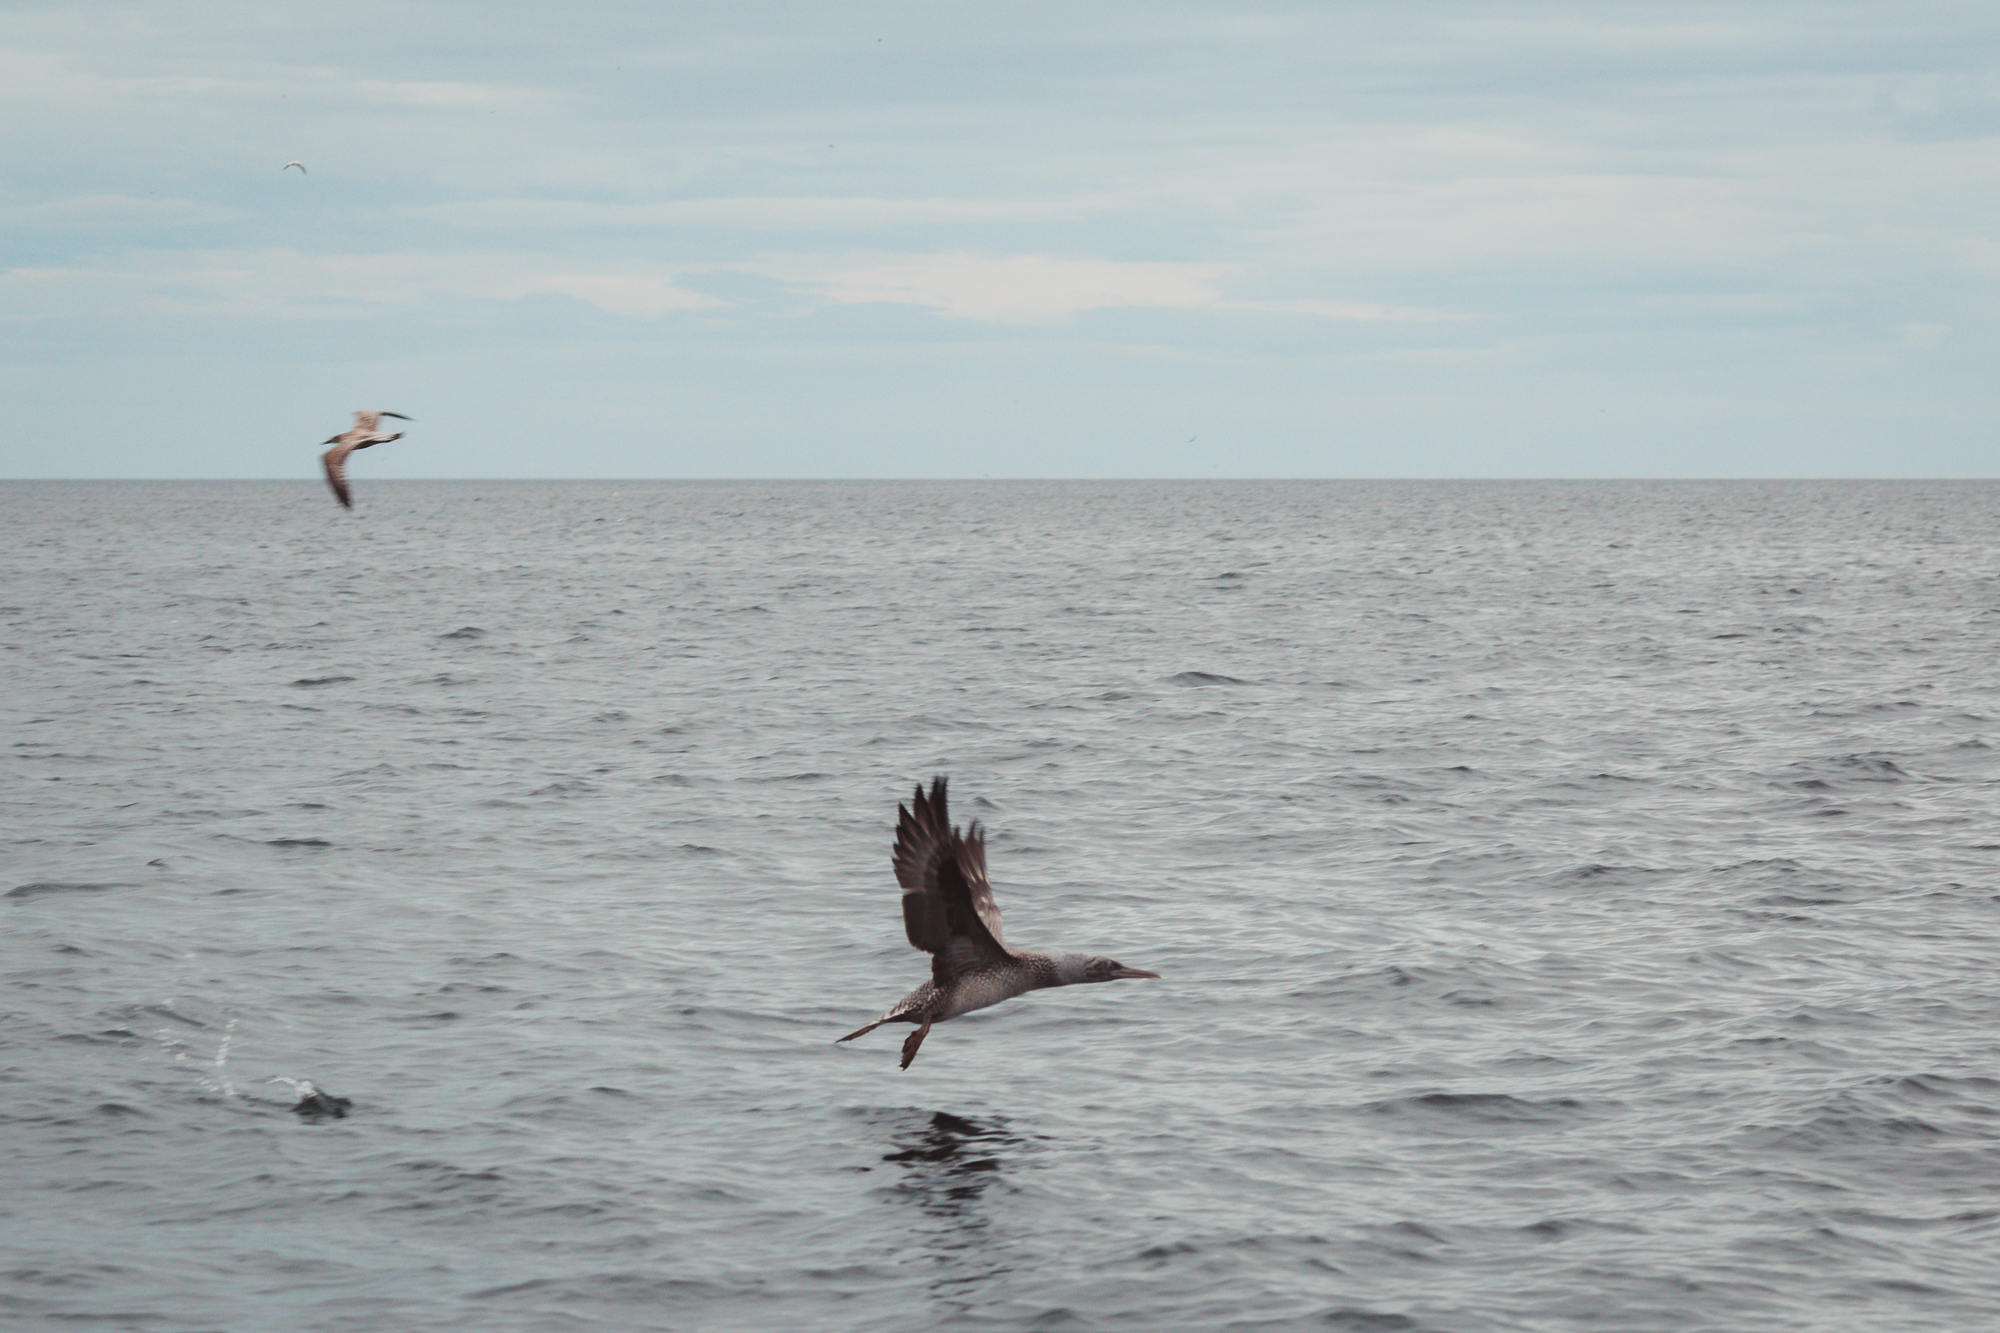 moray-firth-dolphins-phoenix-boats-07